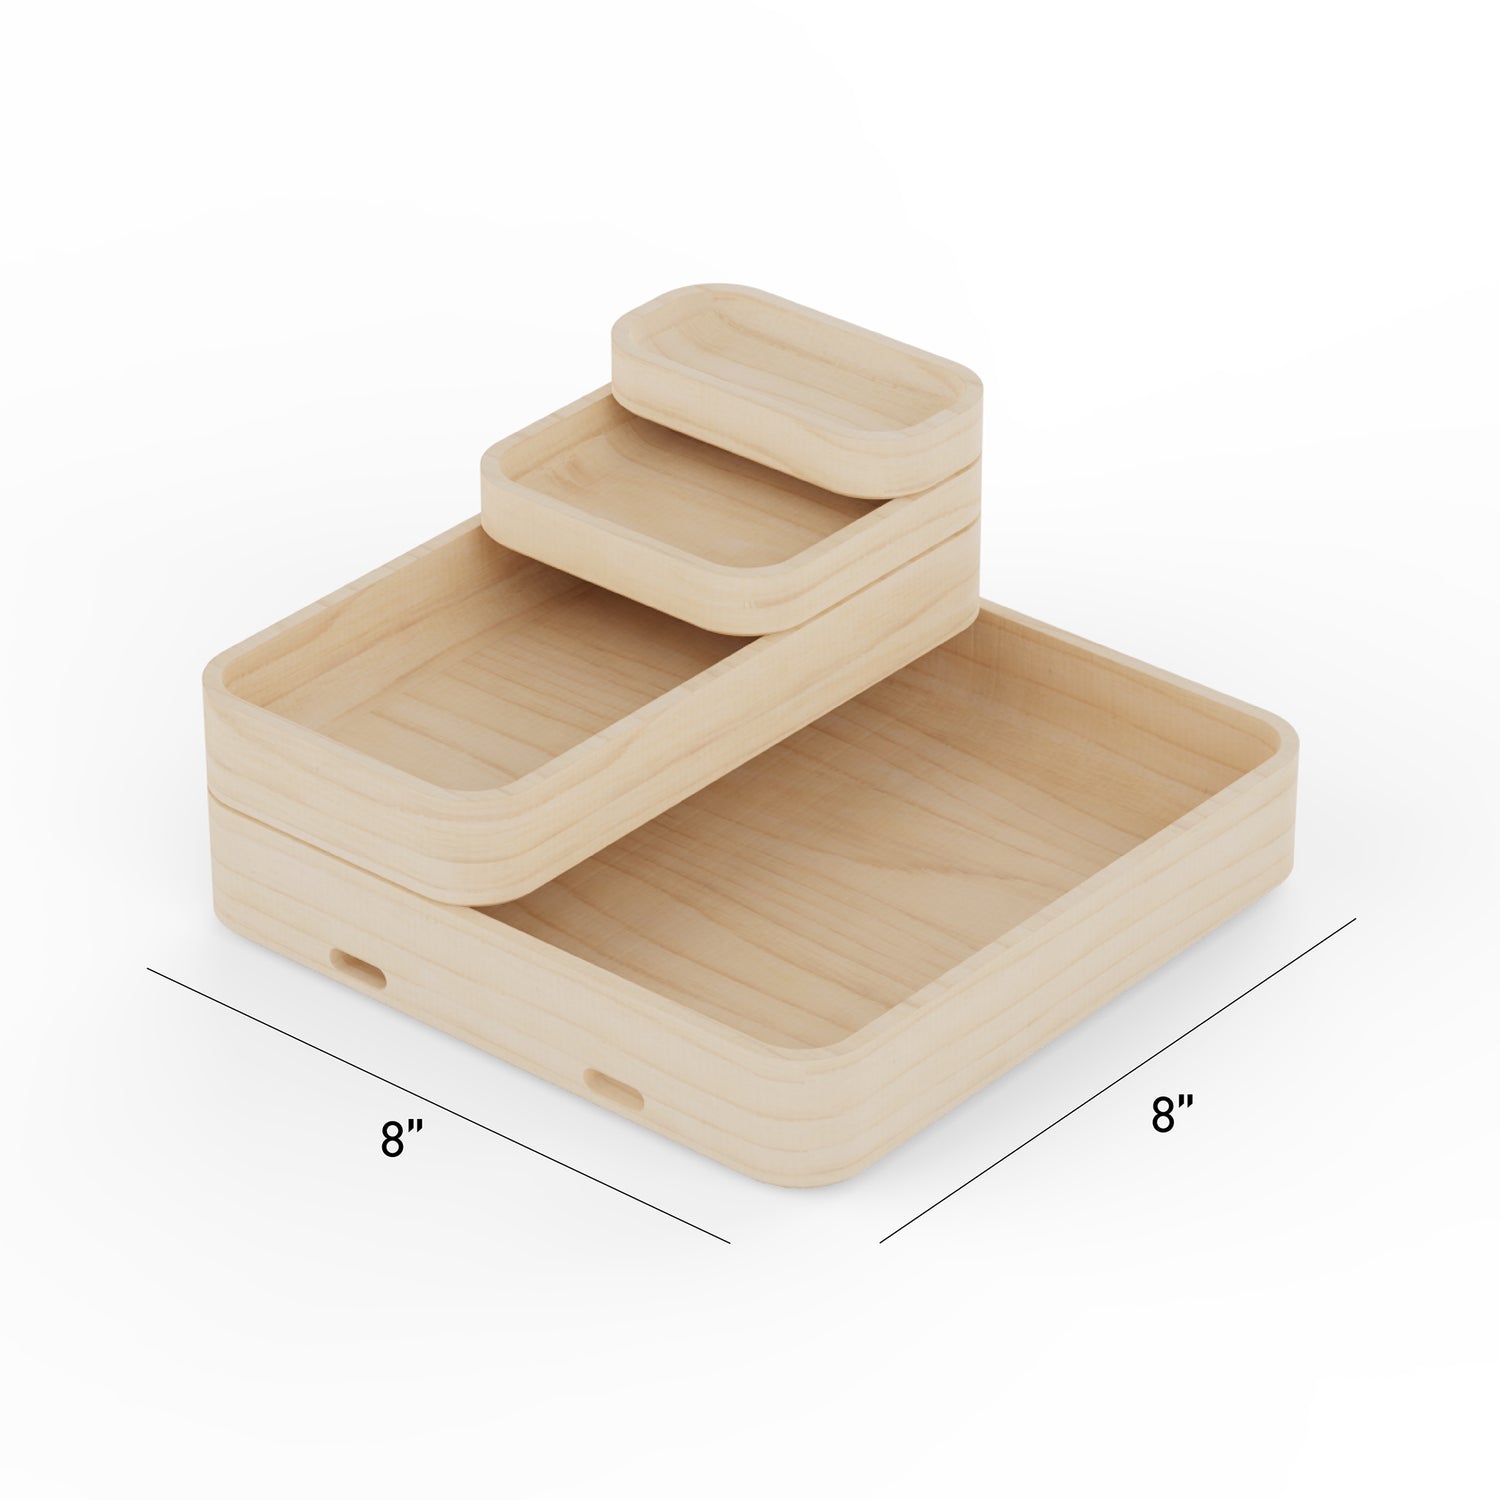 STACK | Modular Desk Organizer